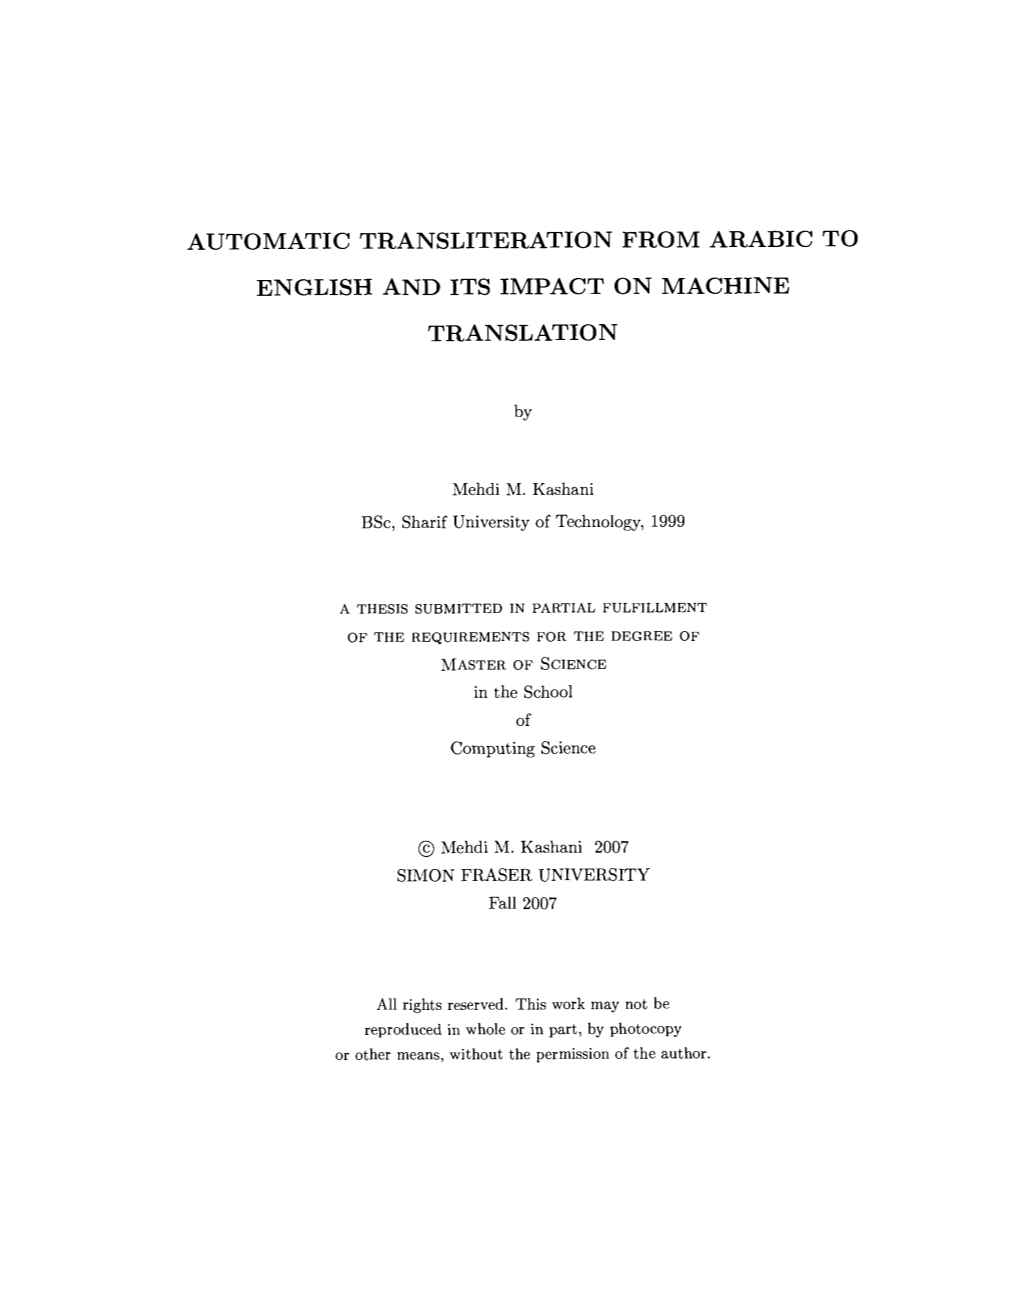 Automatic Transliteration from Arabic to English and Its Impact on Machine Translation